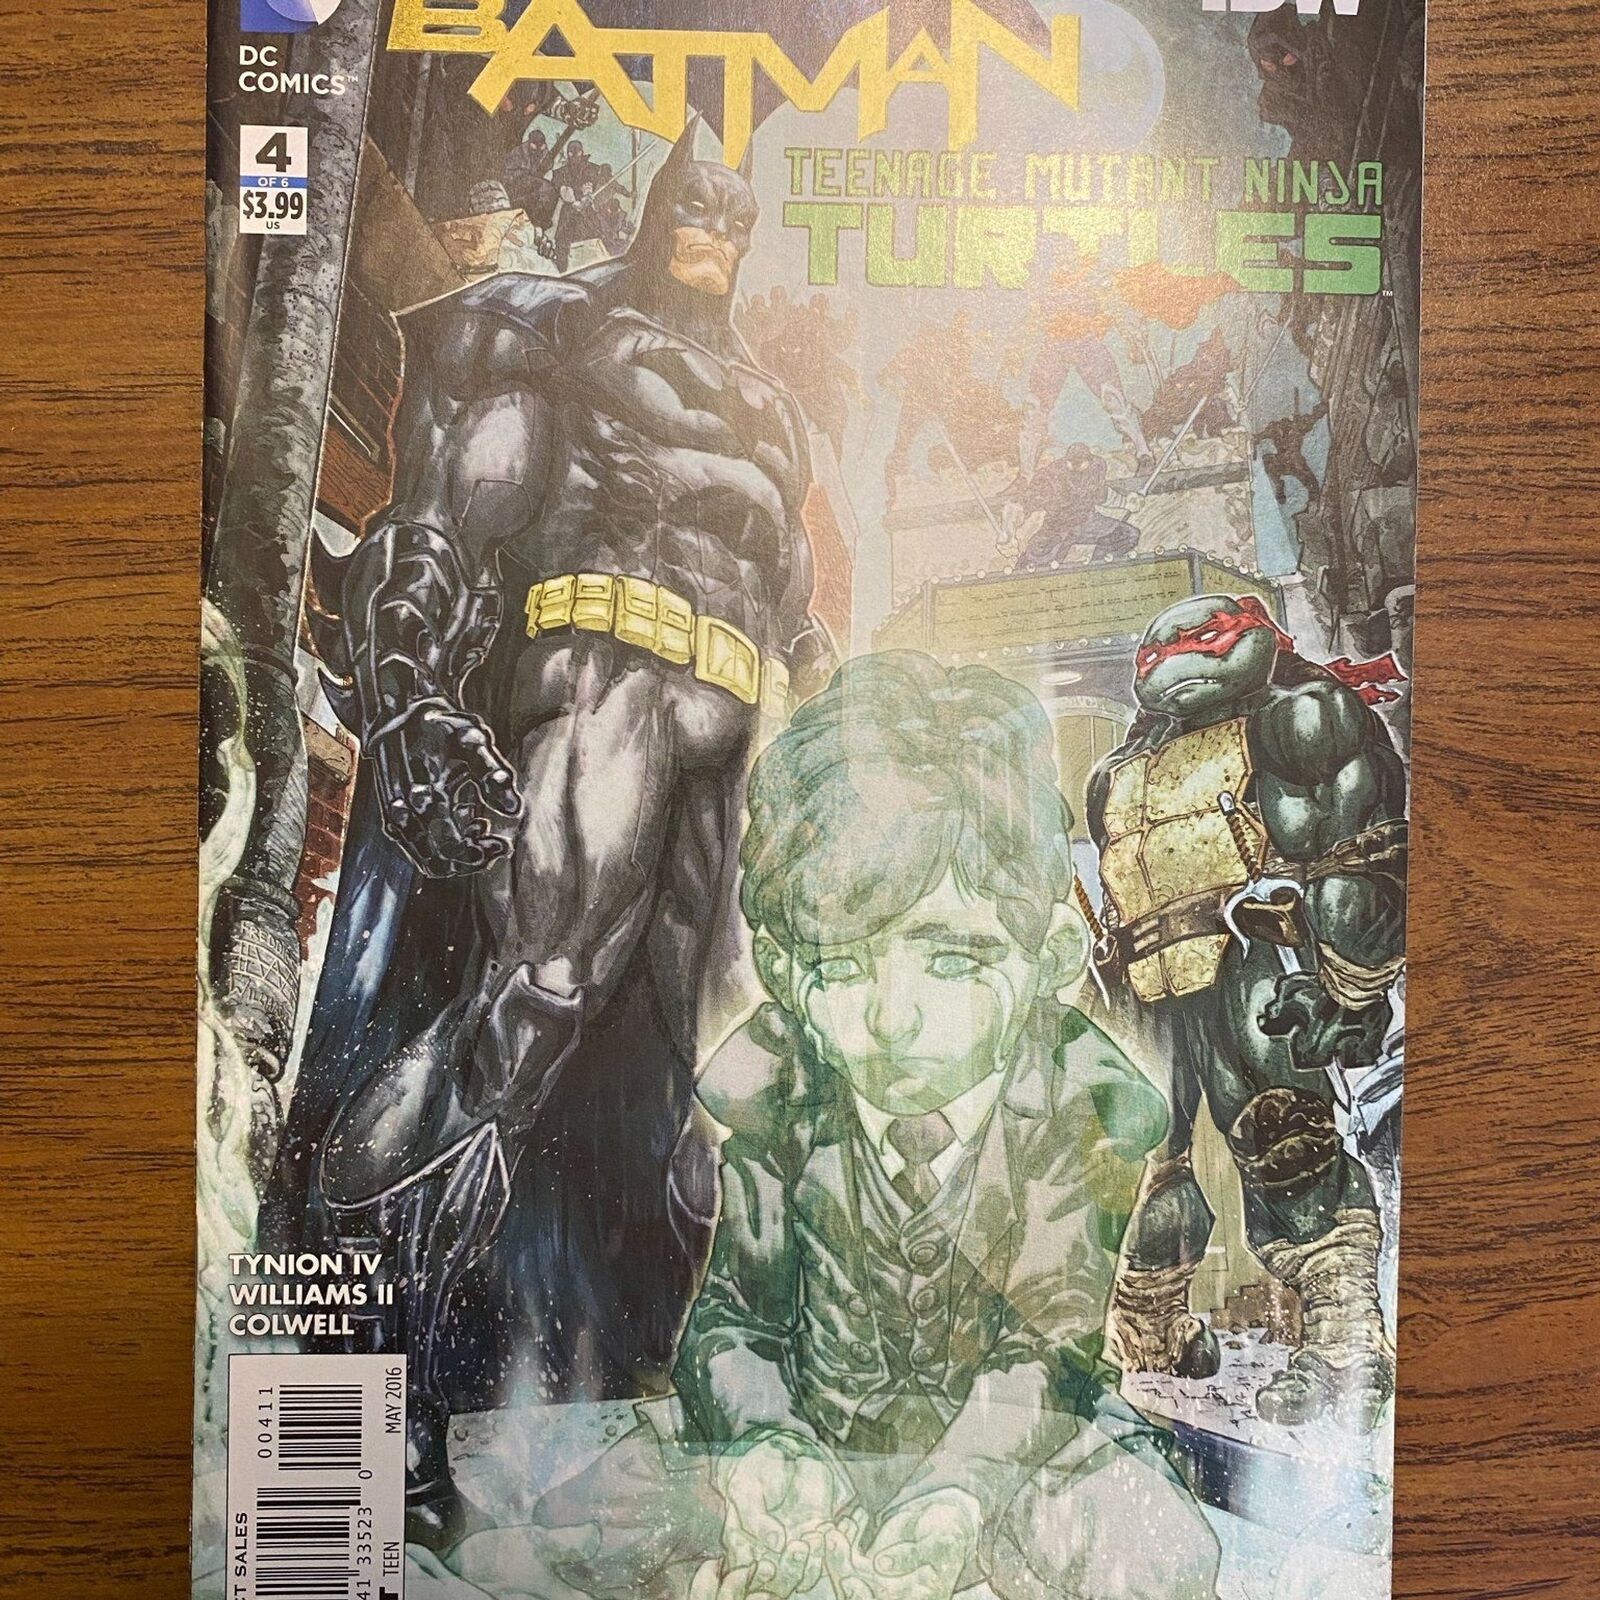 DC Comics Batman & Teenage Mutant Ninja Turtles #4 of 6 (May 2016)